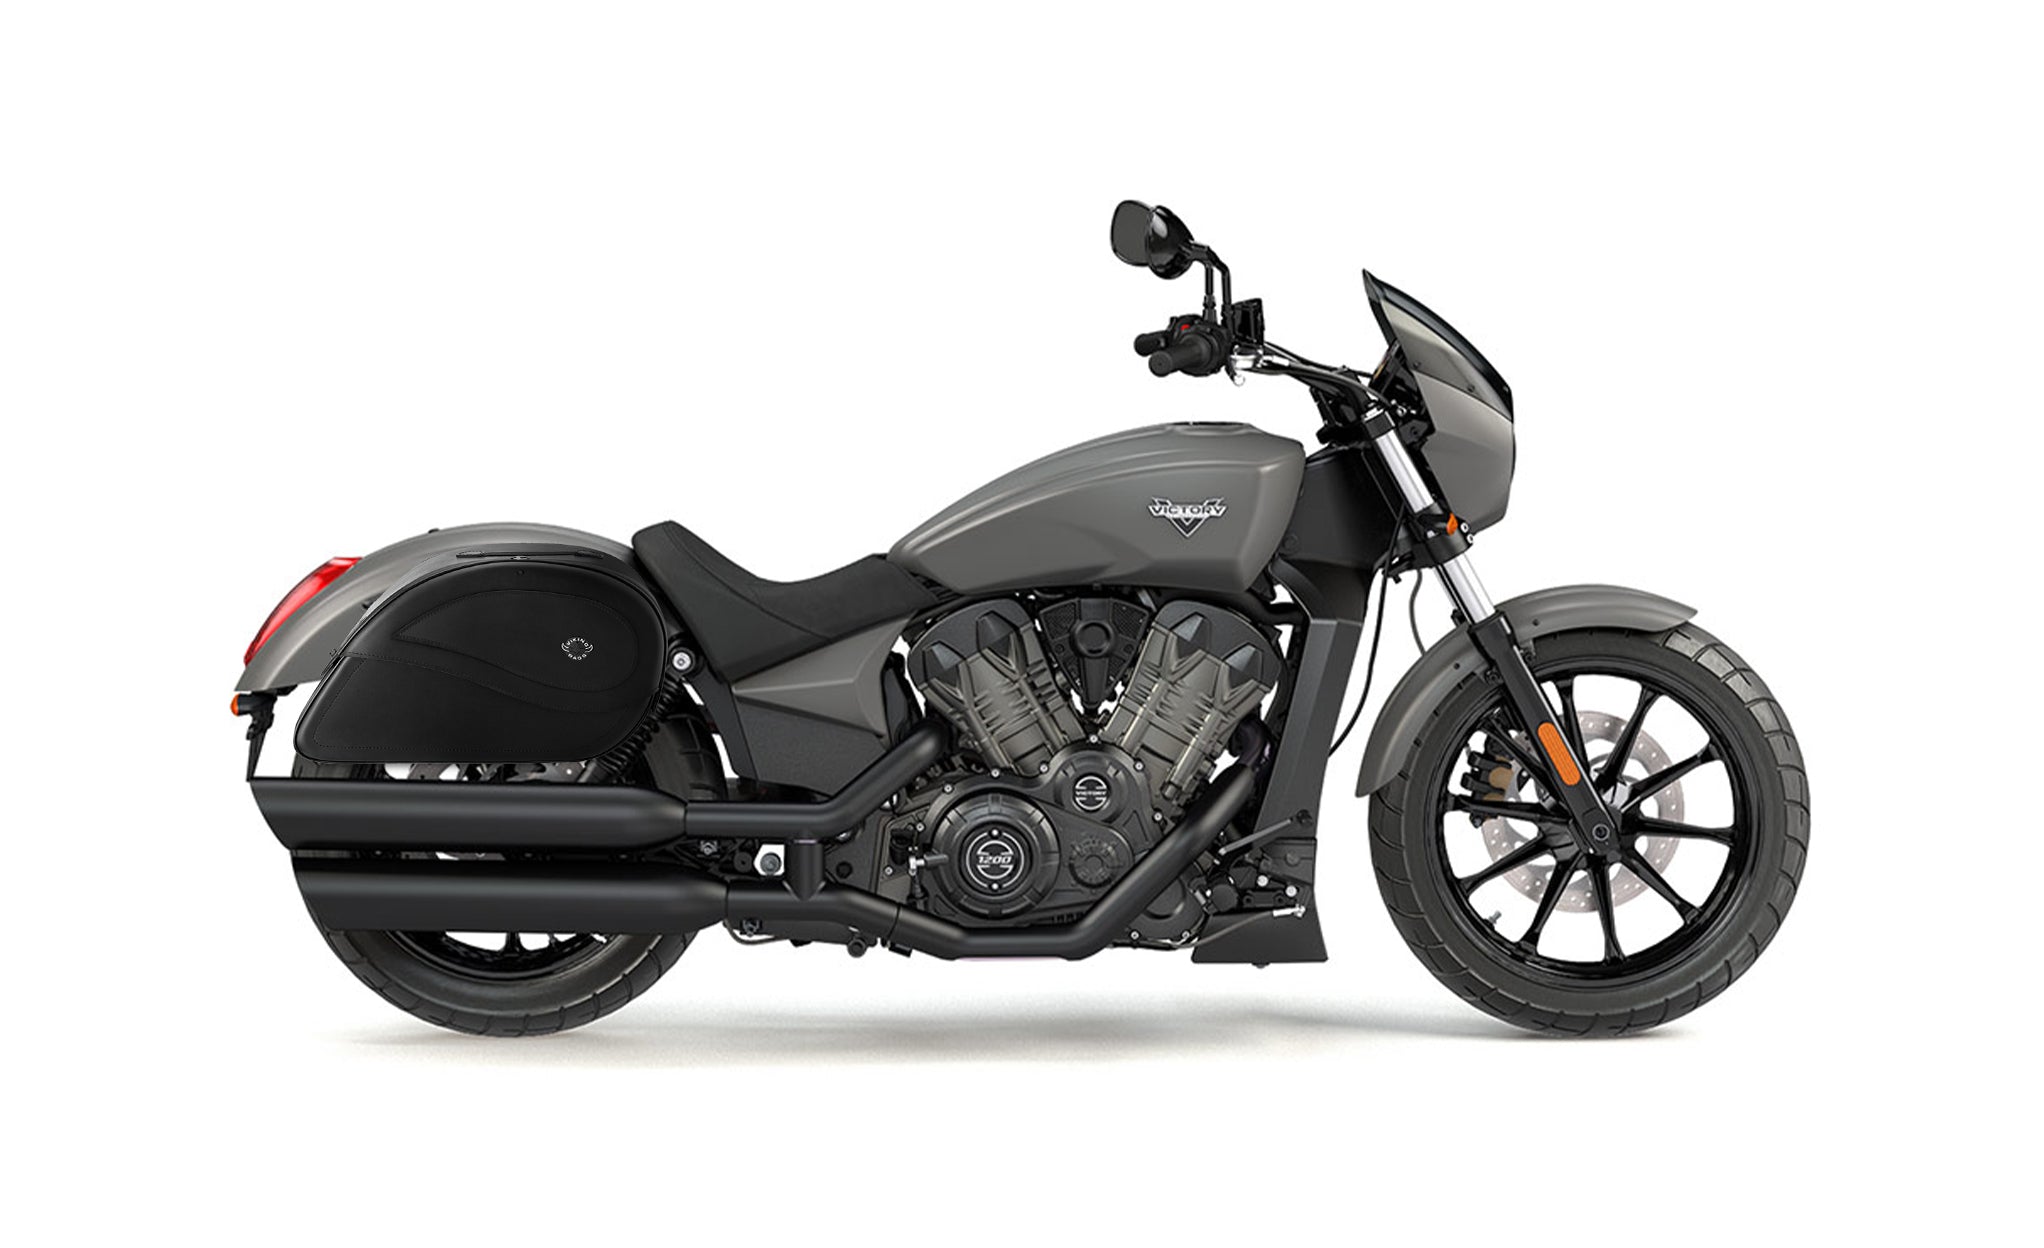 30L - Ultimate Large Victory Octane Motorcycle Leather Saddlebags on Bike Photo @expand